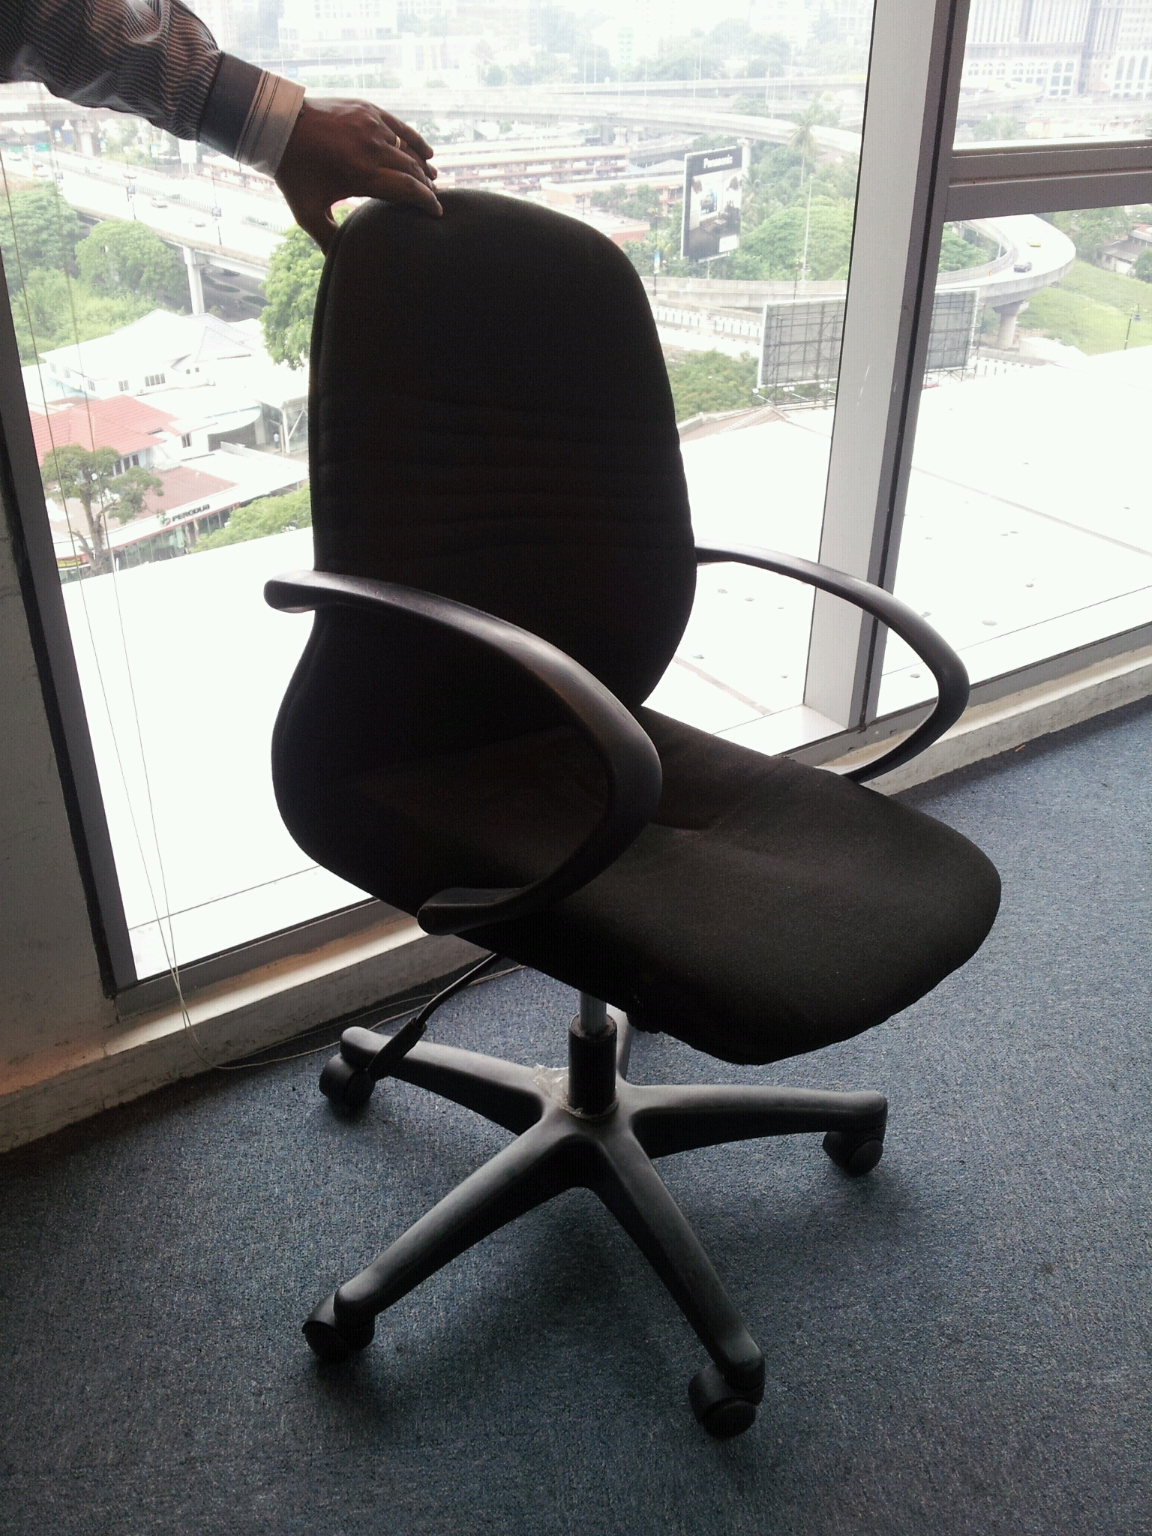 Breaks chair. Provata кресло офисное. Сломанное офисное кресло. Кресло офис ГИВ. Офис стул с трещиной.